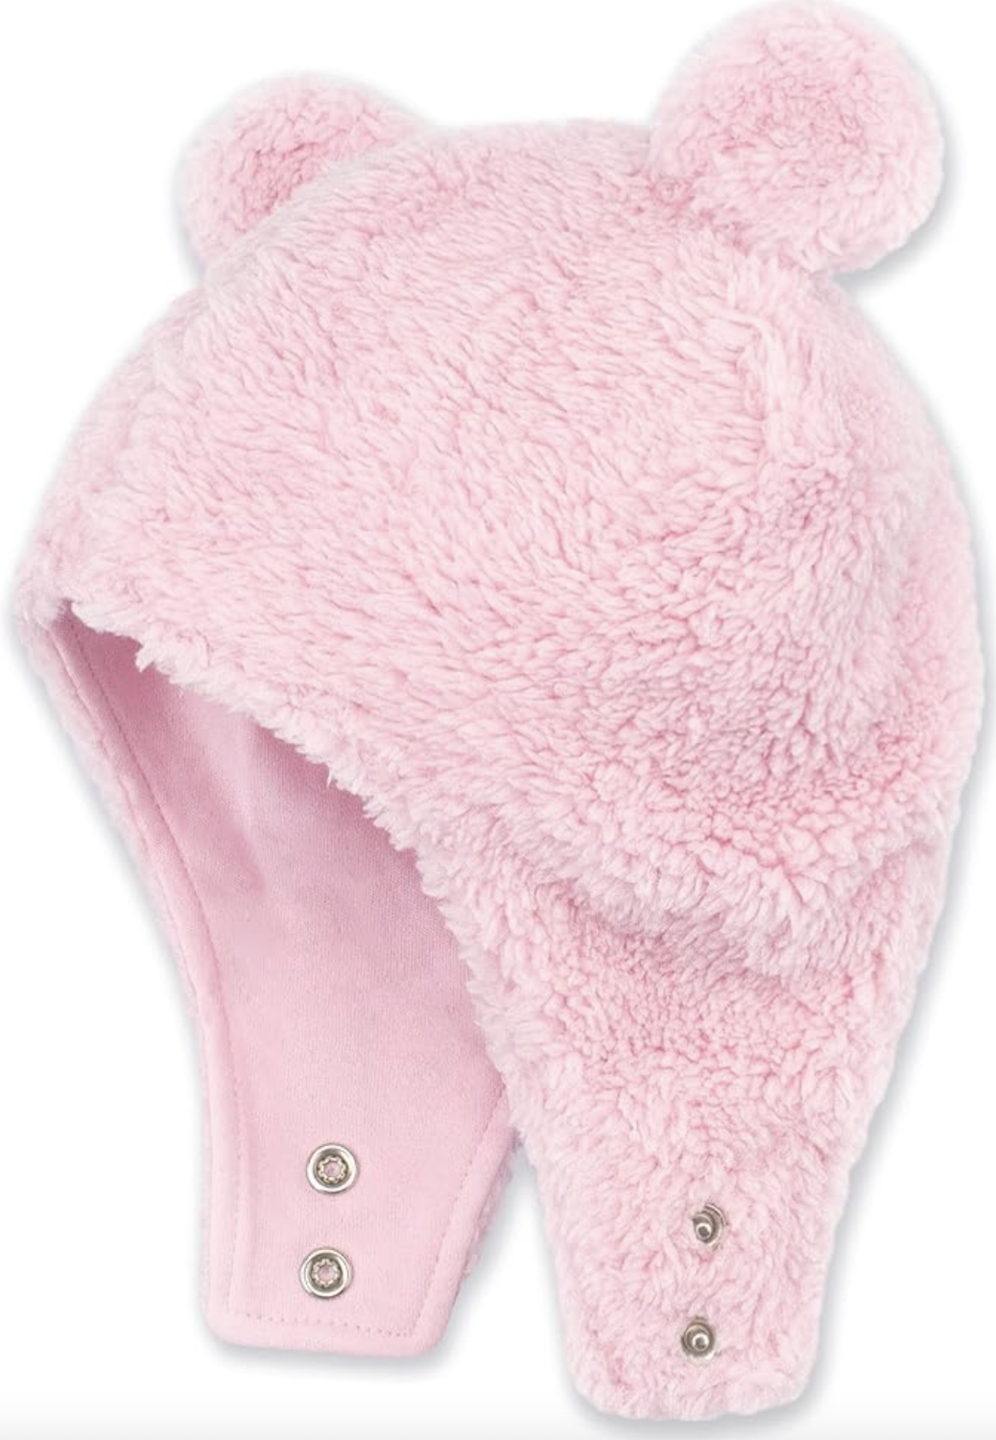 Zutano Furry Bear Hat Baby Pink